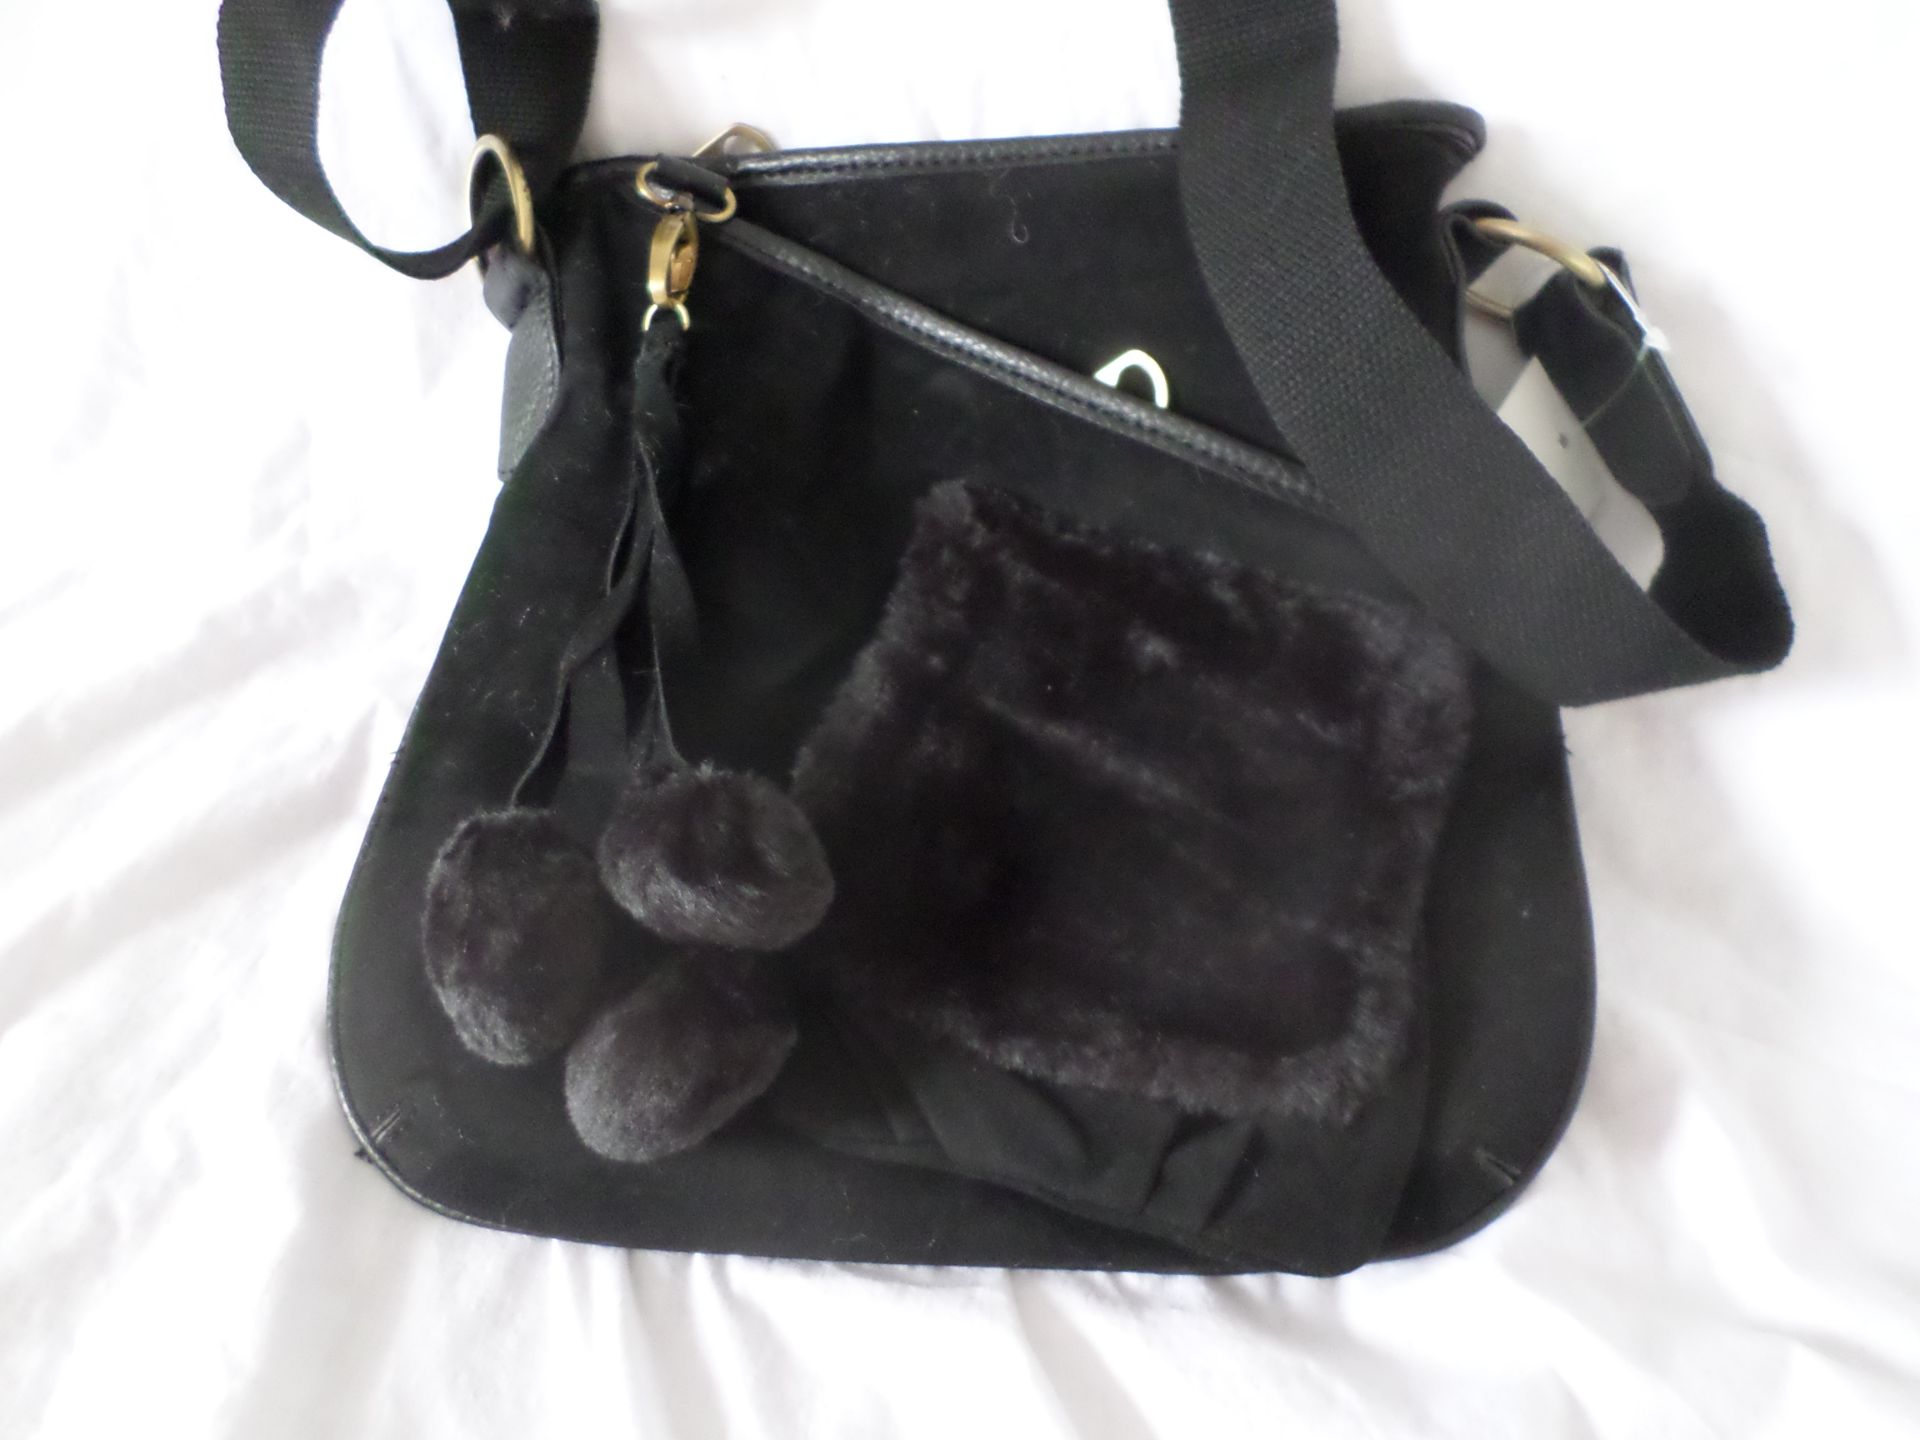 Fur Crossover Handbag. Brand New. RRP £19.99 - Image 2 of 2